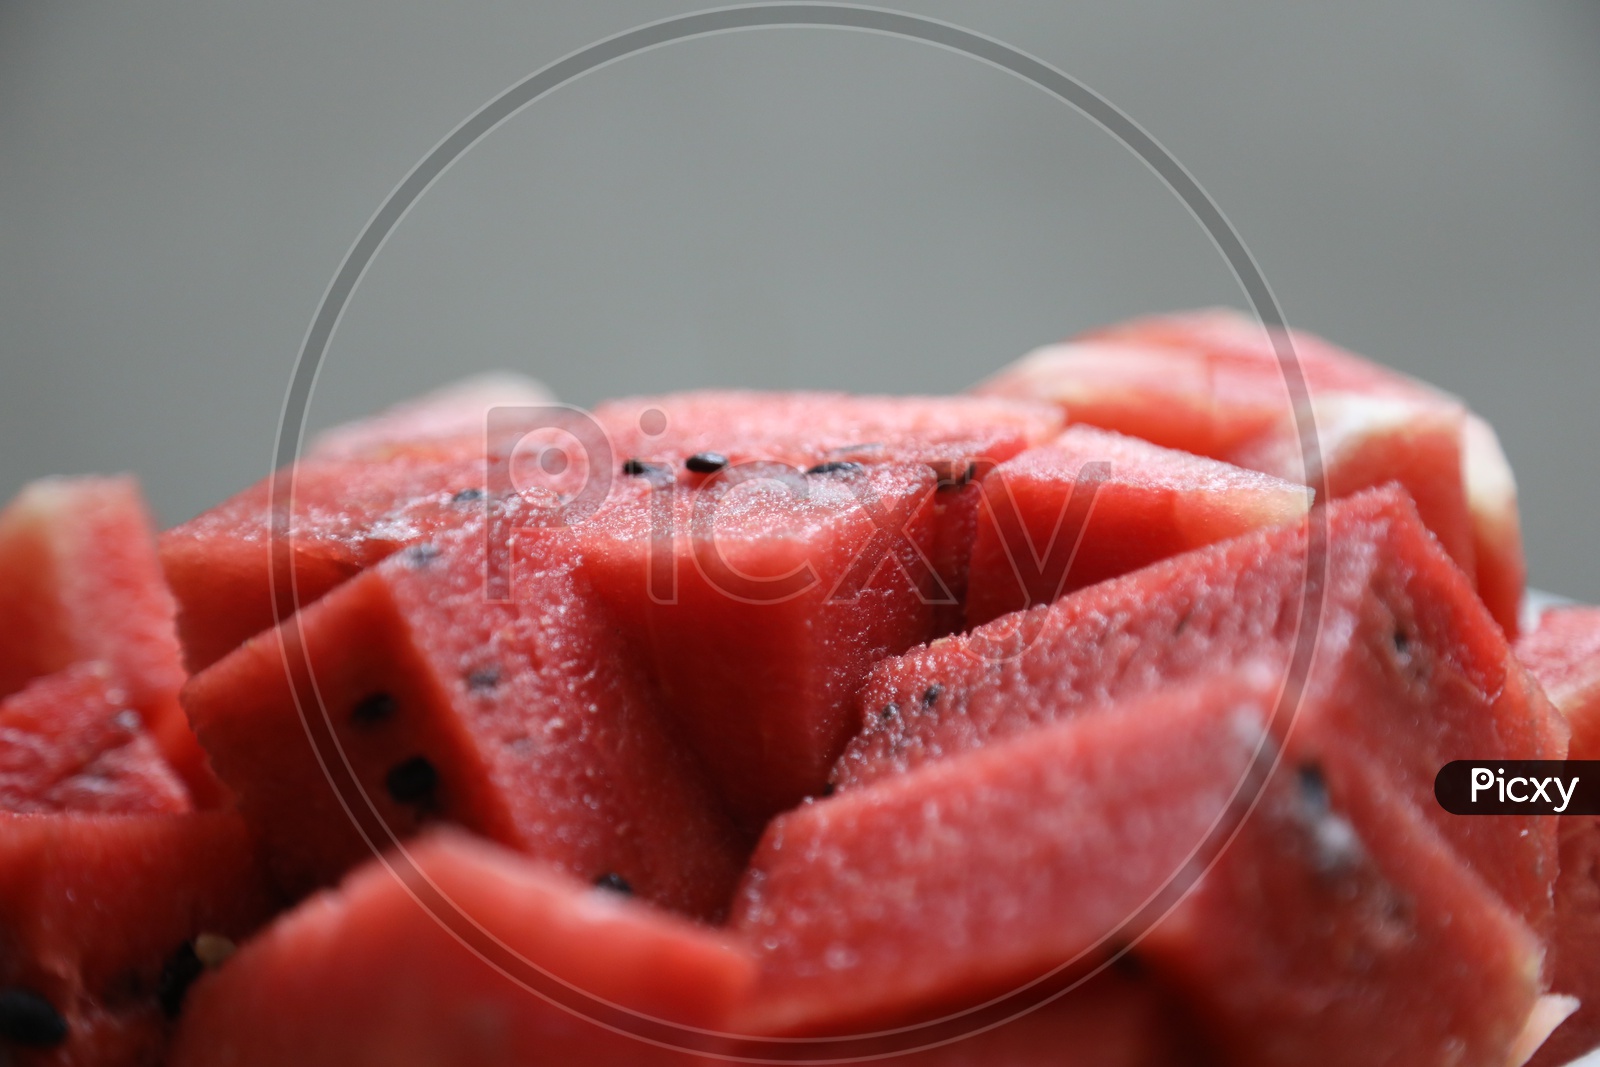 Watermelon Slices